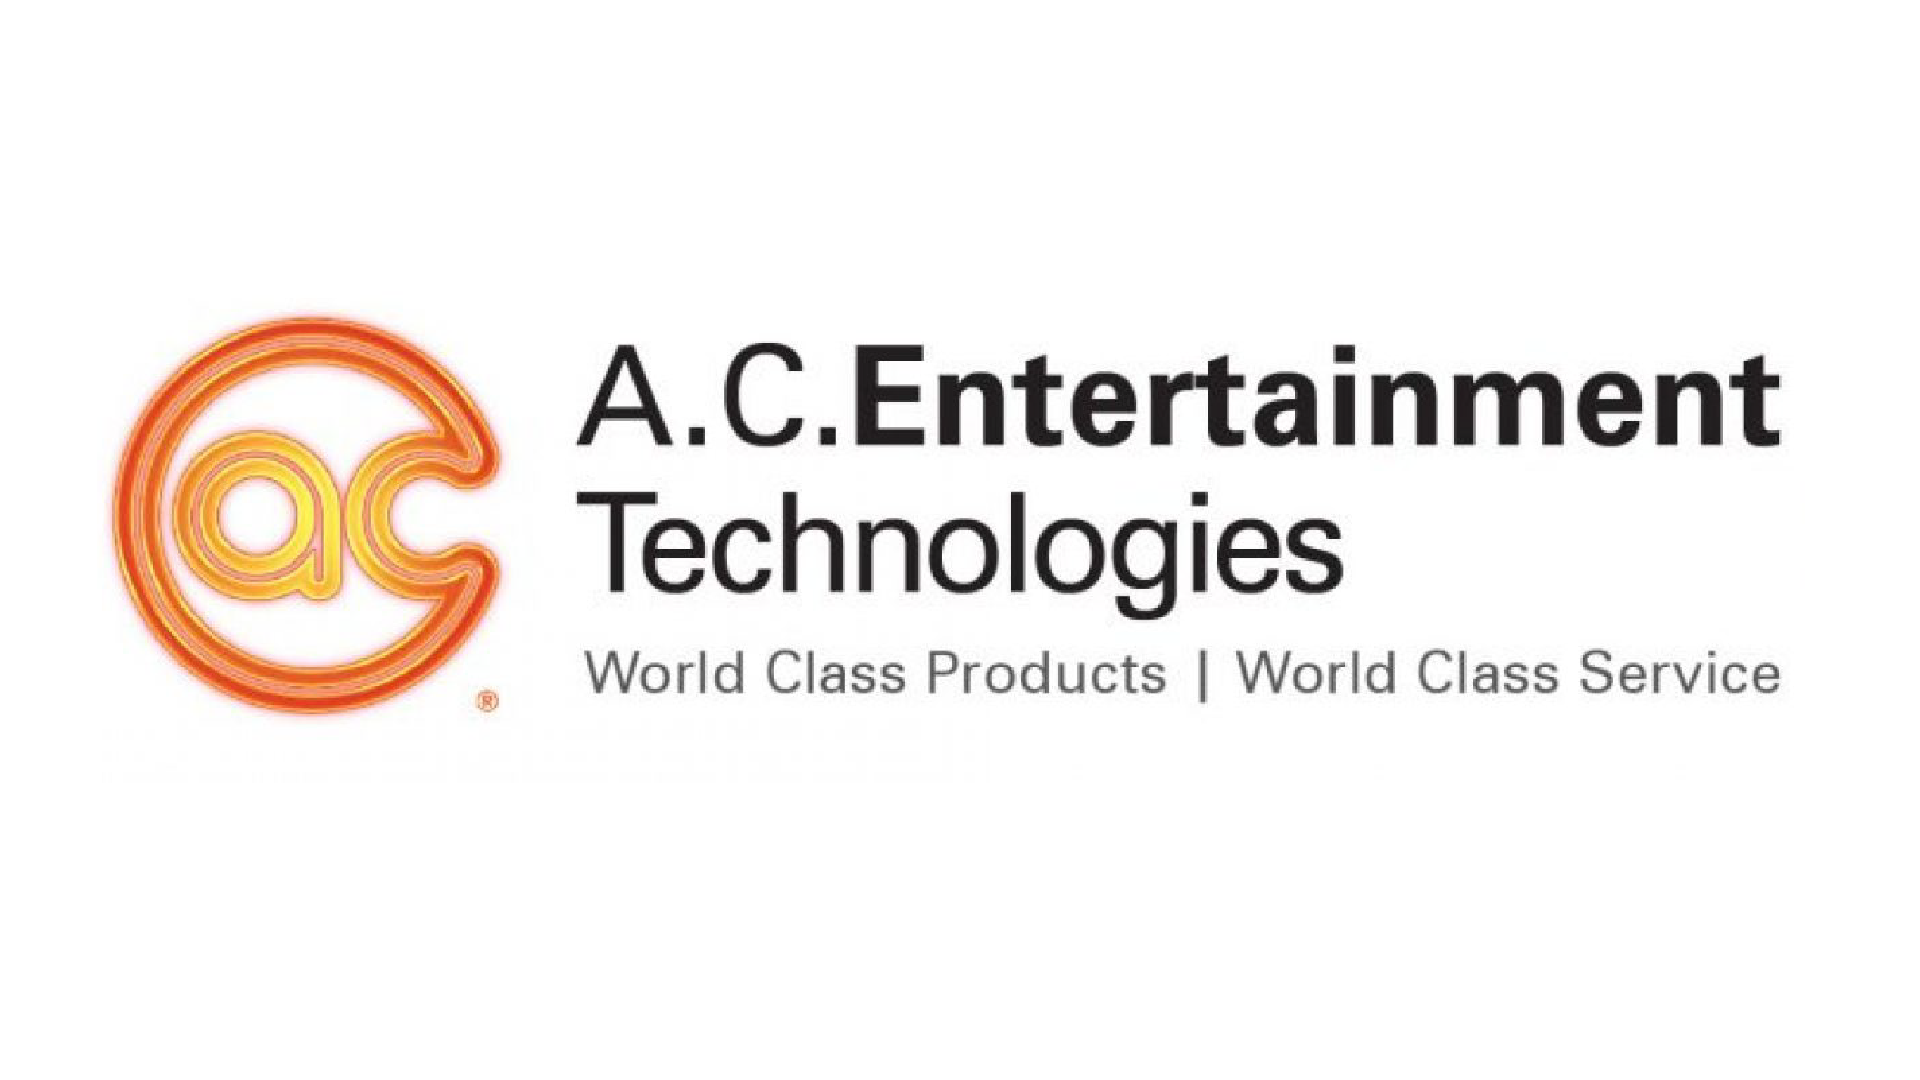 A.C. Entertainment Technologies logo